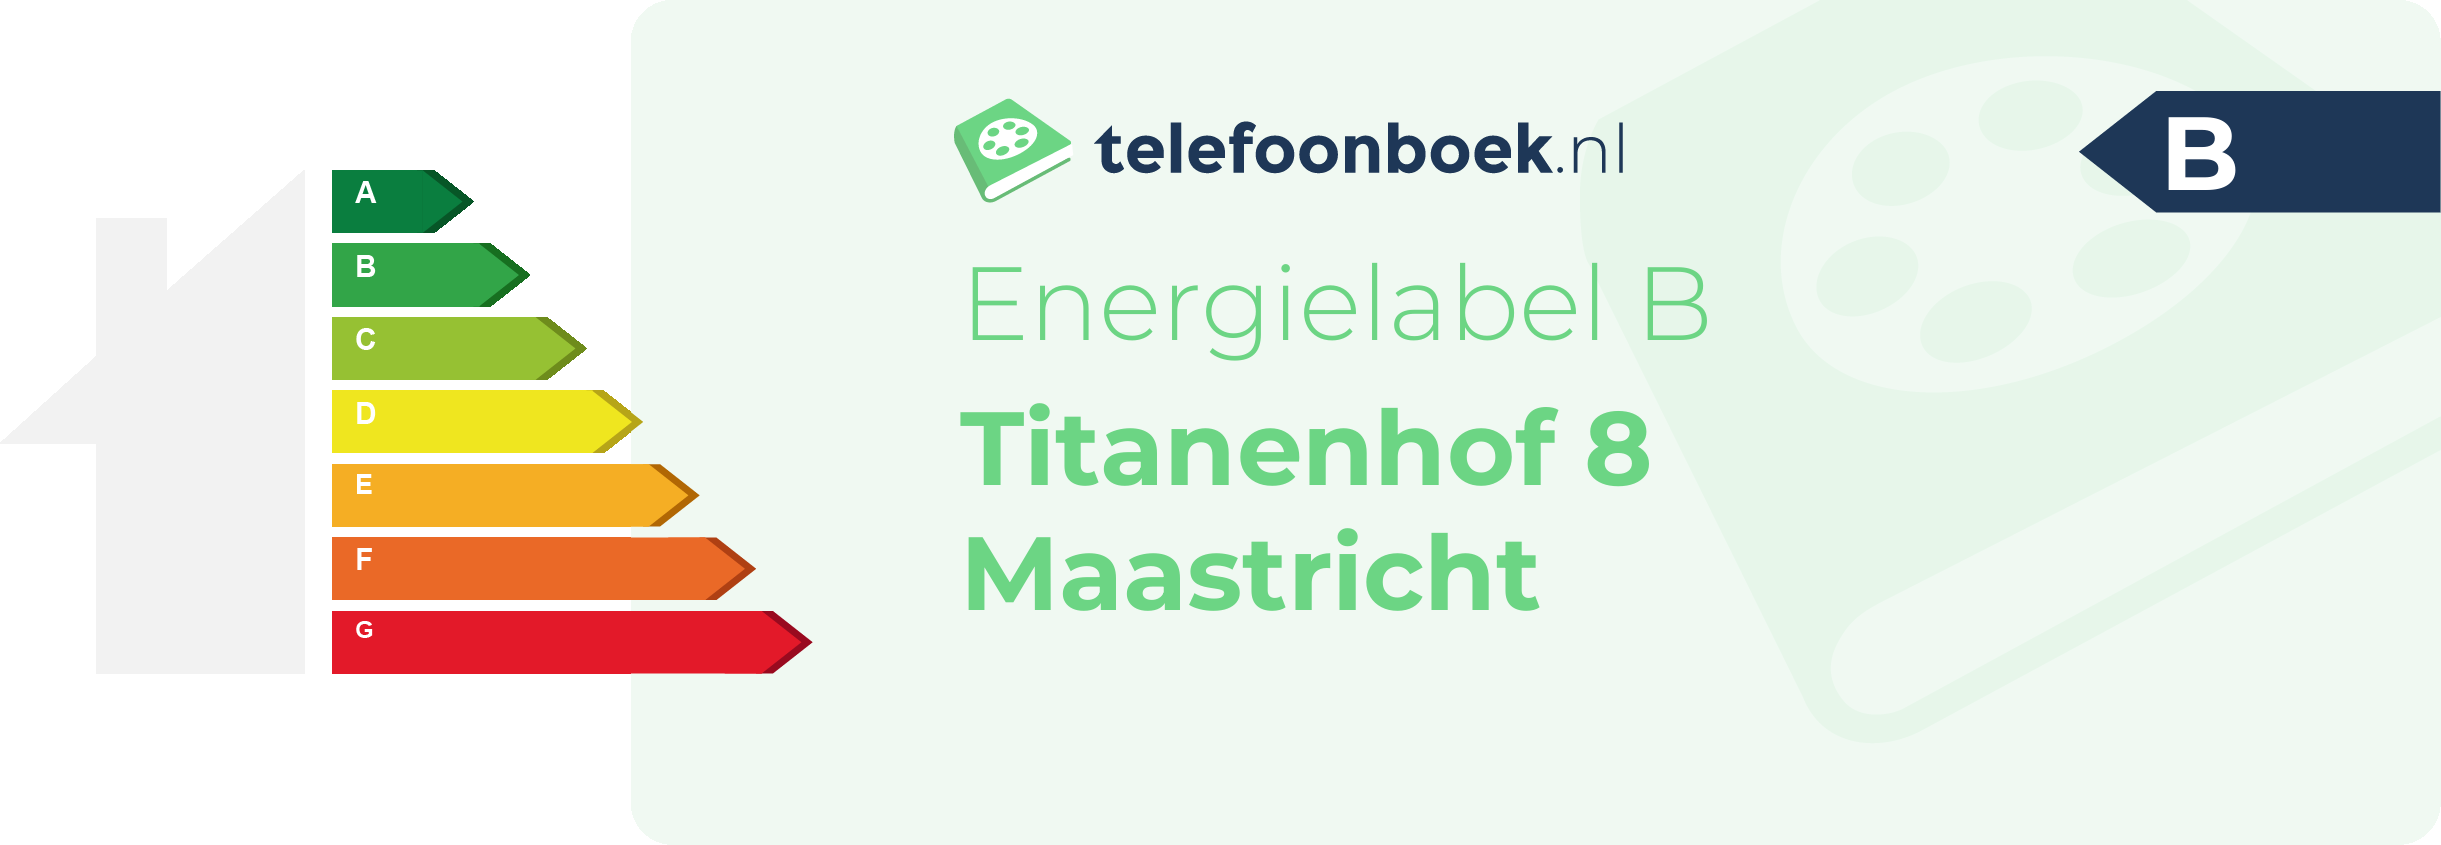 Energielabel Titanenhof 8 Maastricht